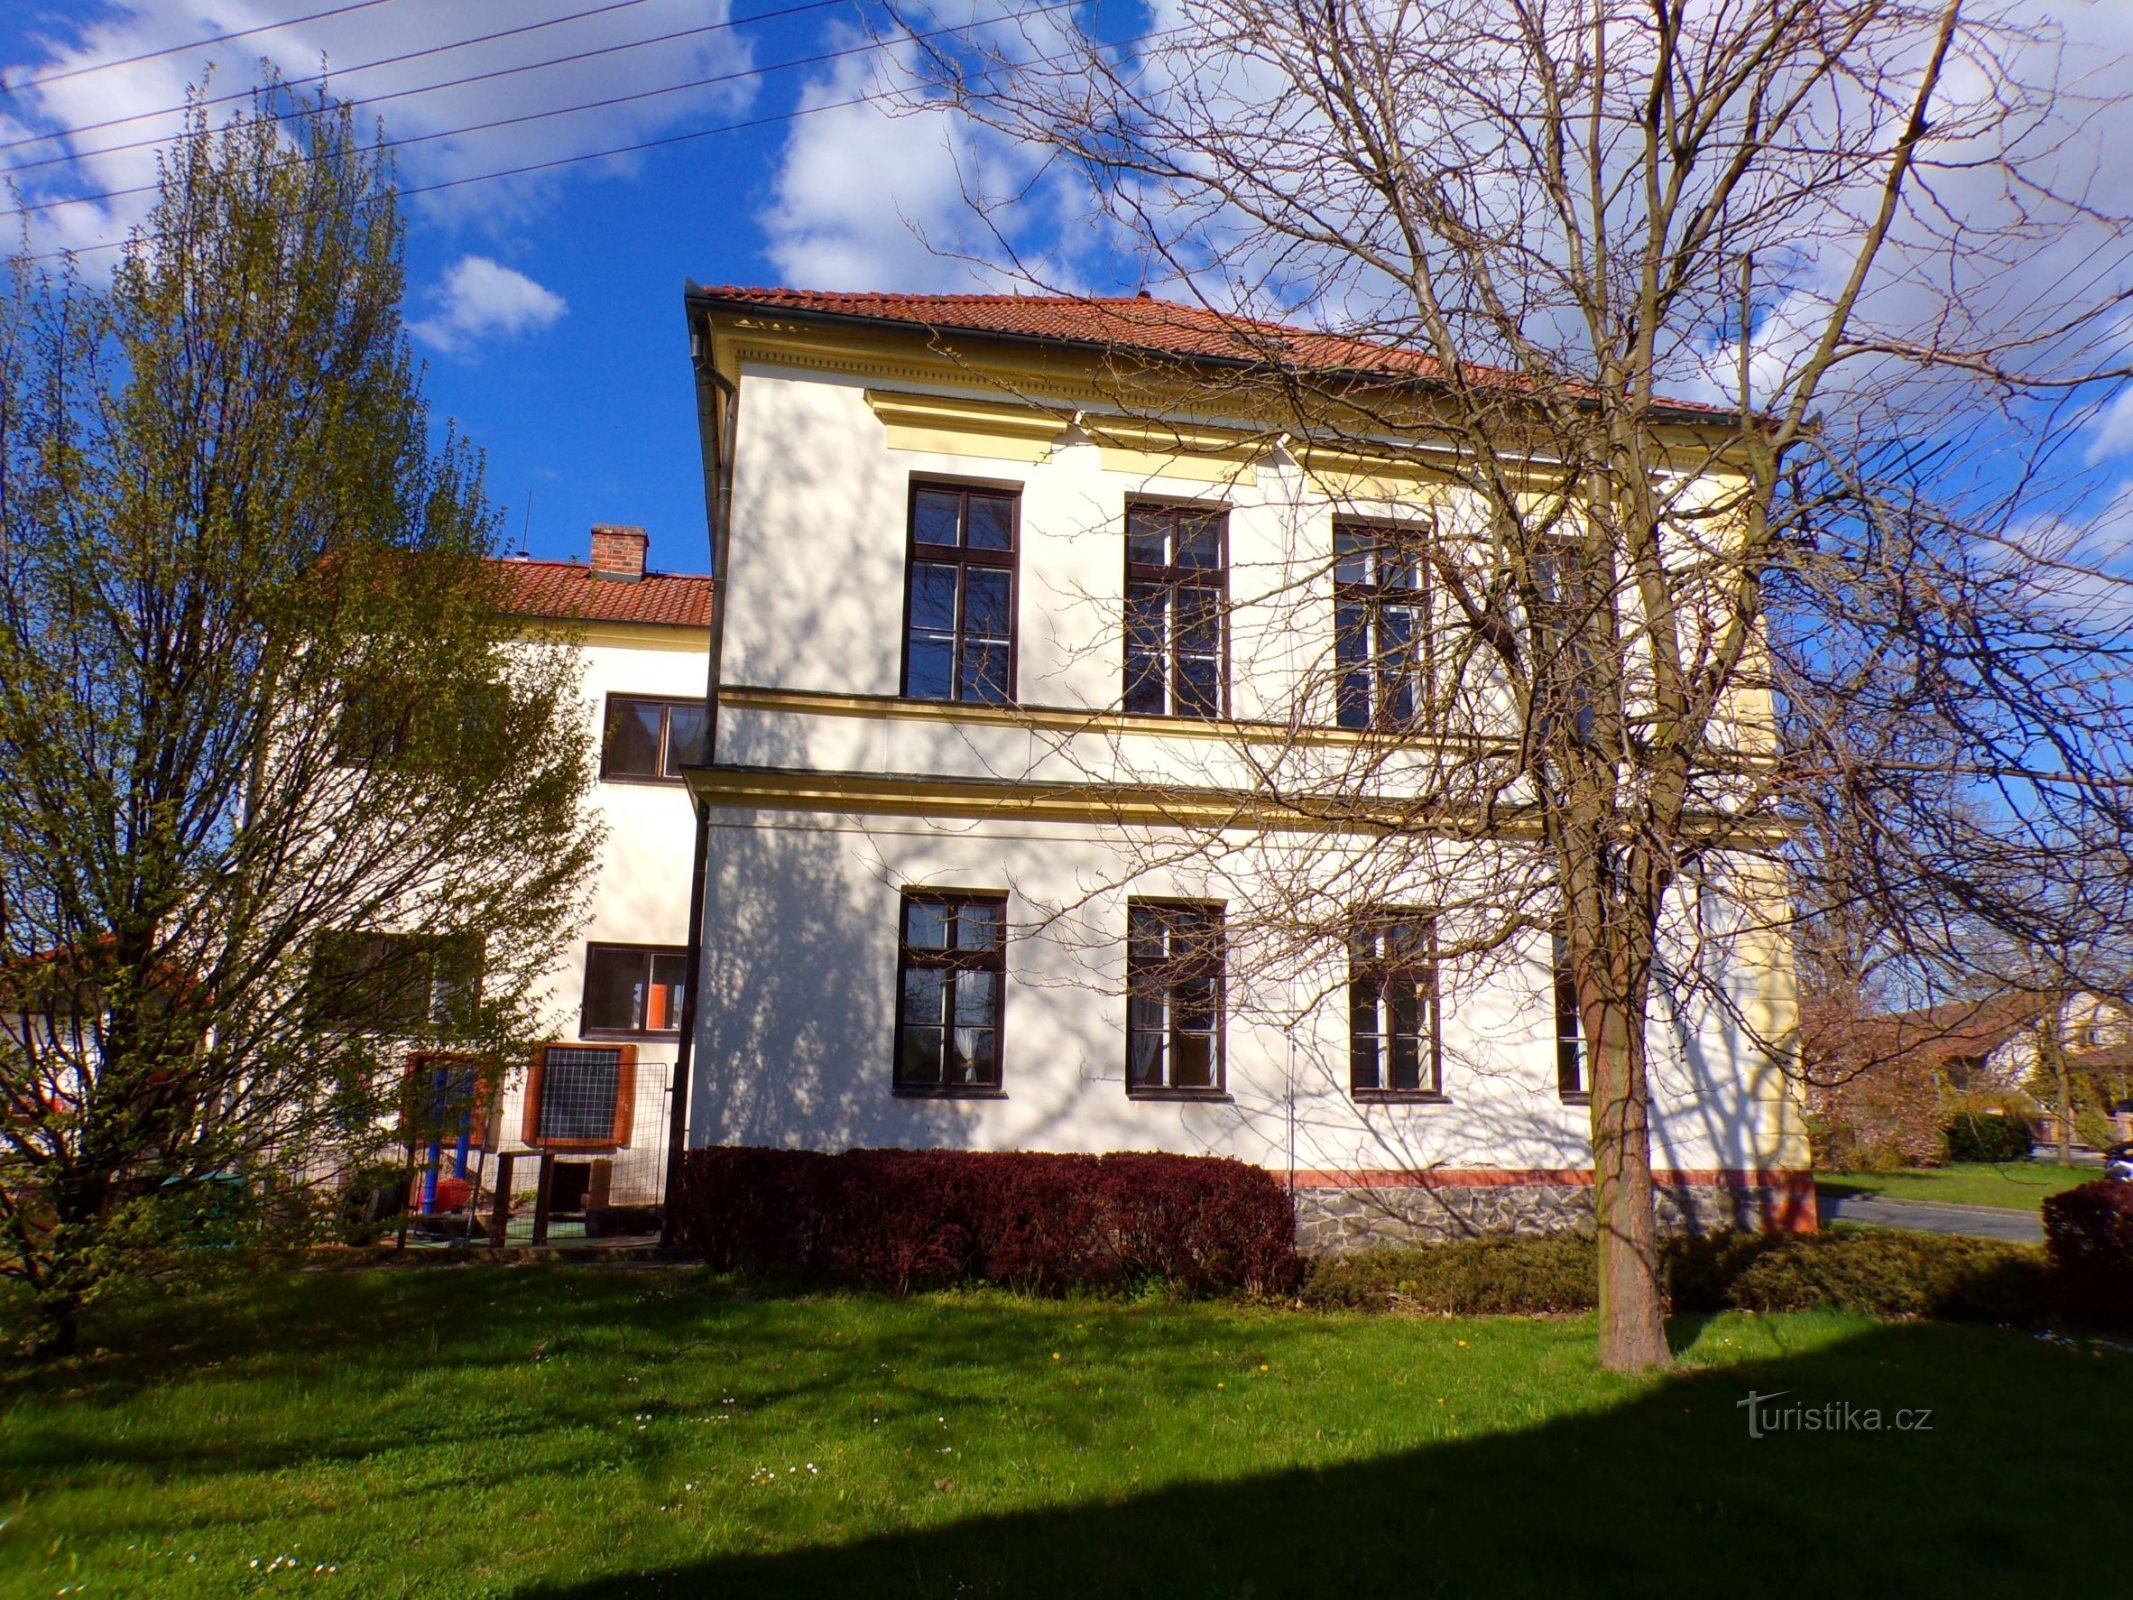 Scuola di Rosice nad Labem (Pardubice, 23.4.2022/XNUMX/XNUMX)